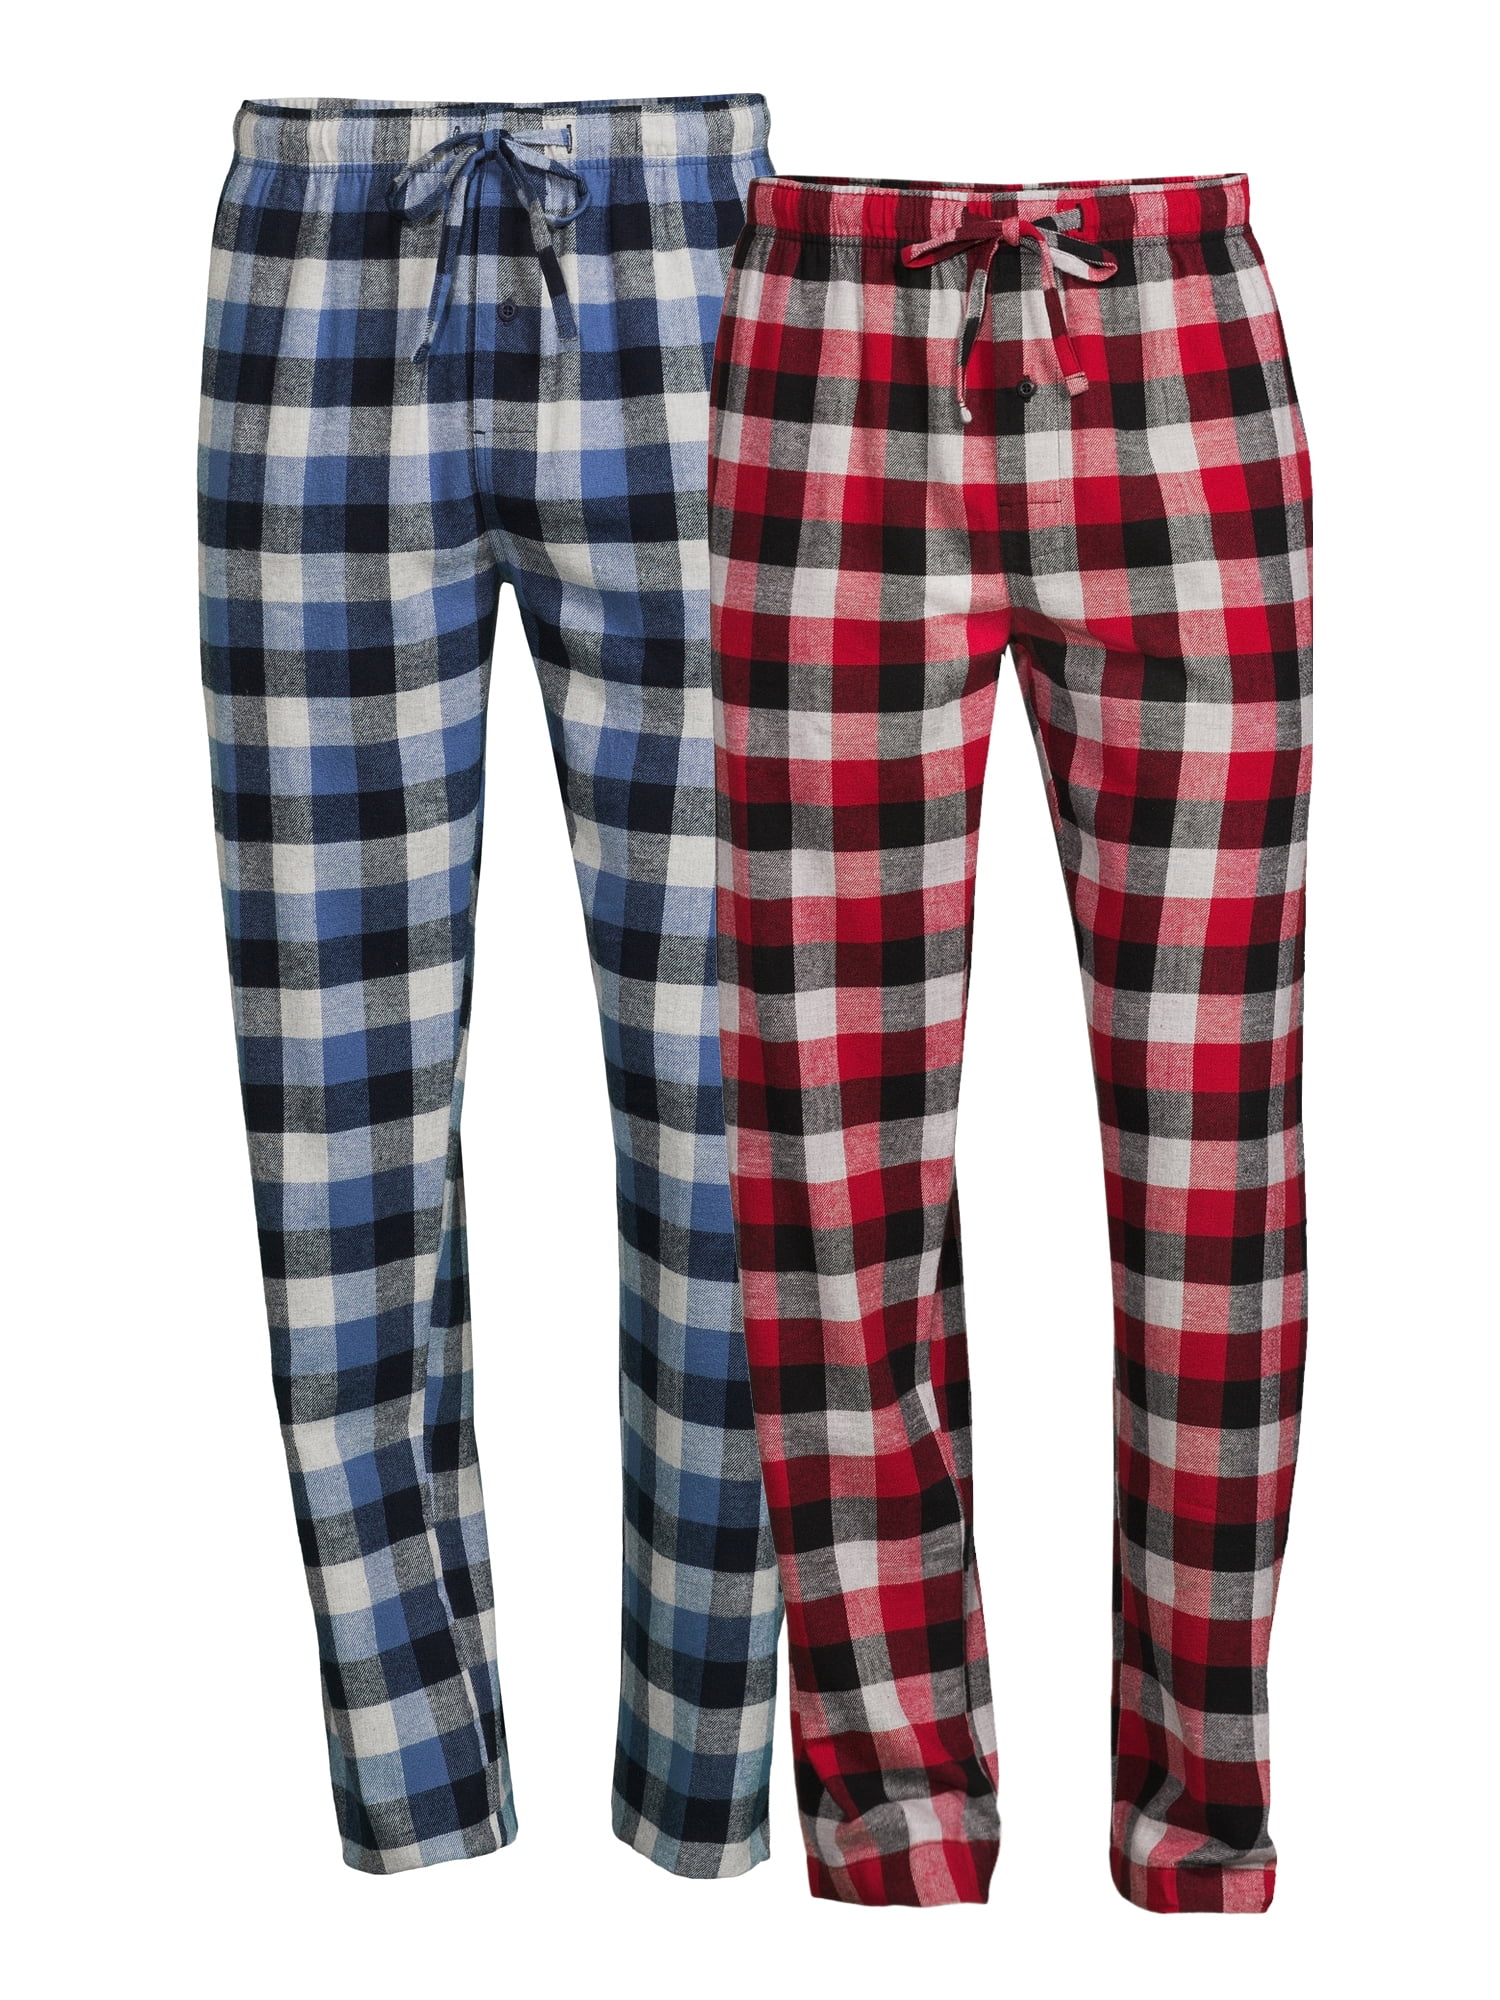 Hanes Mens 100% Cotton Flannel Plaid Pajama Top and Pant Set 